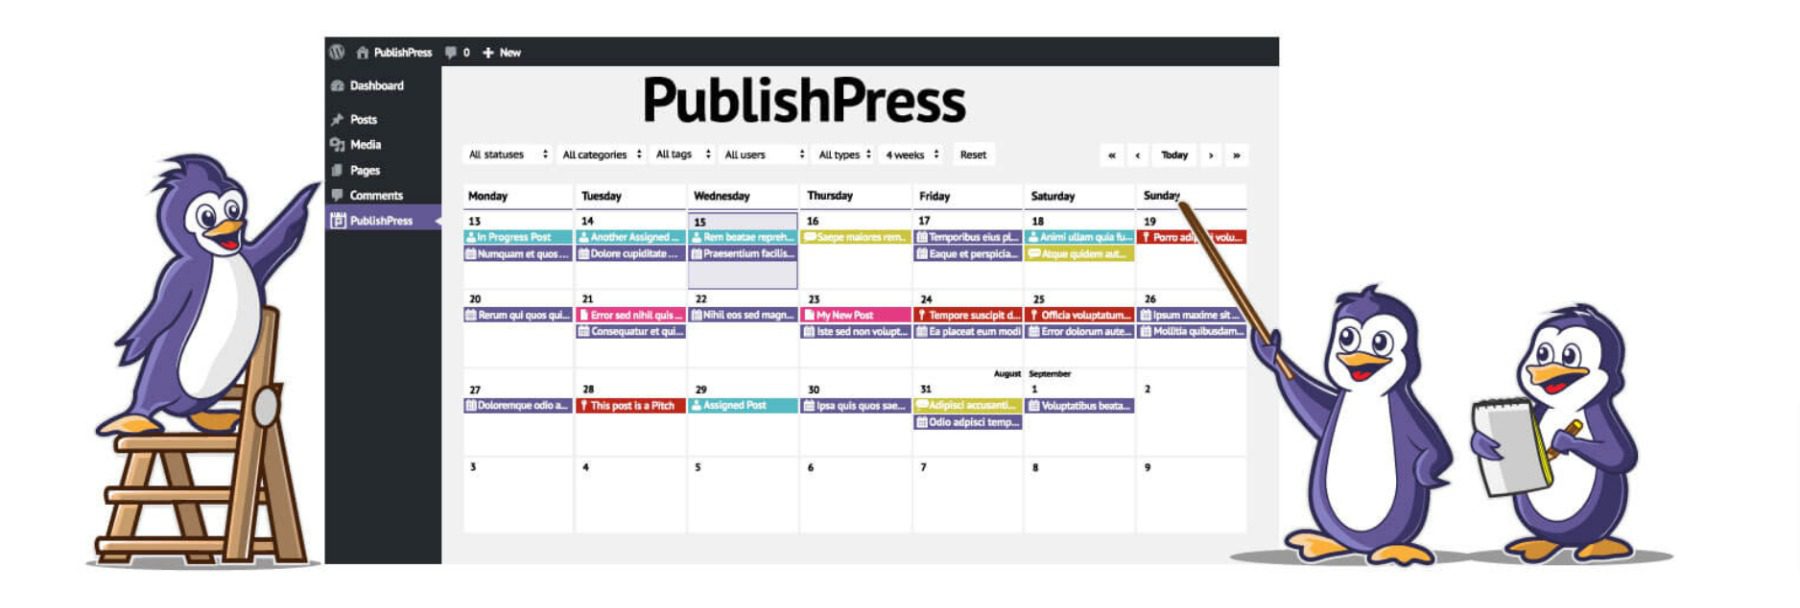 PublishPress Editorial Calendar